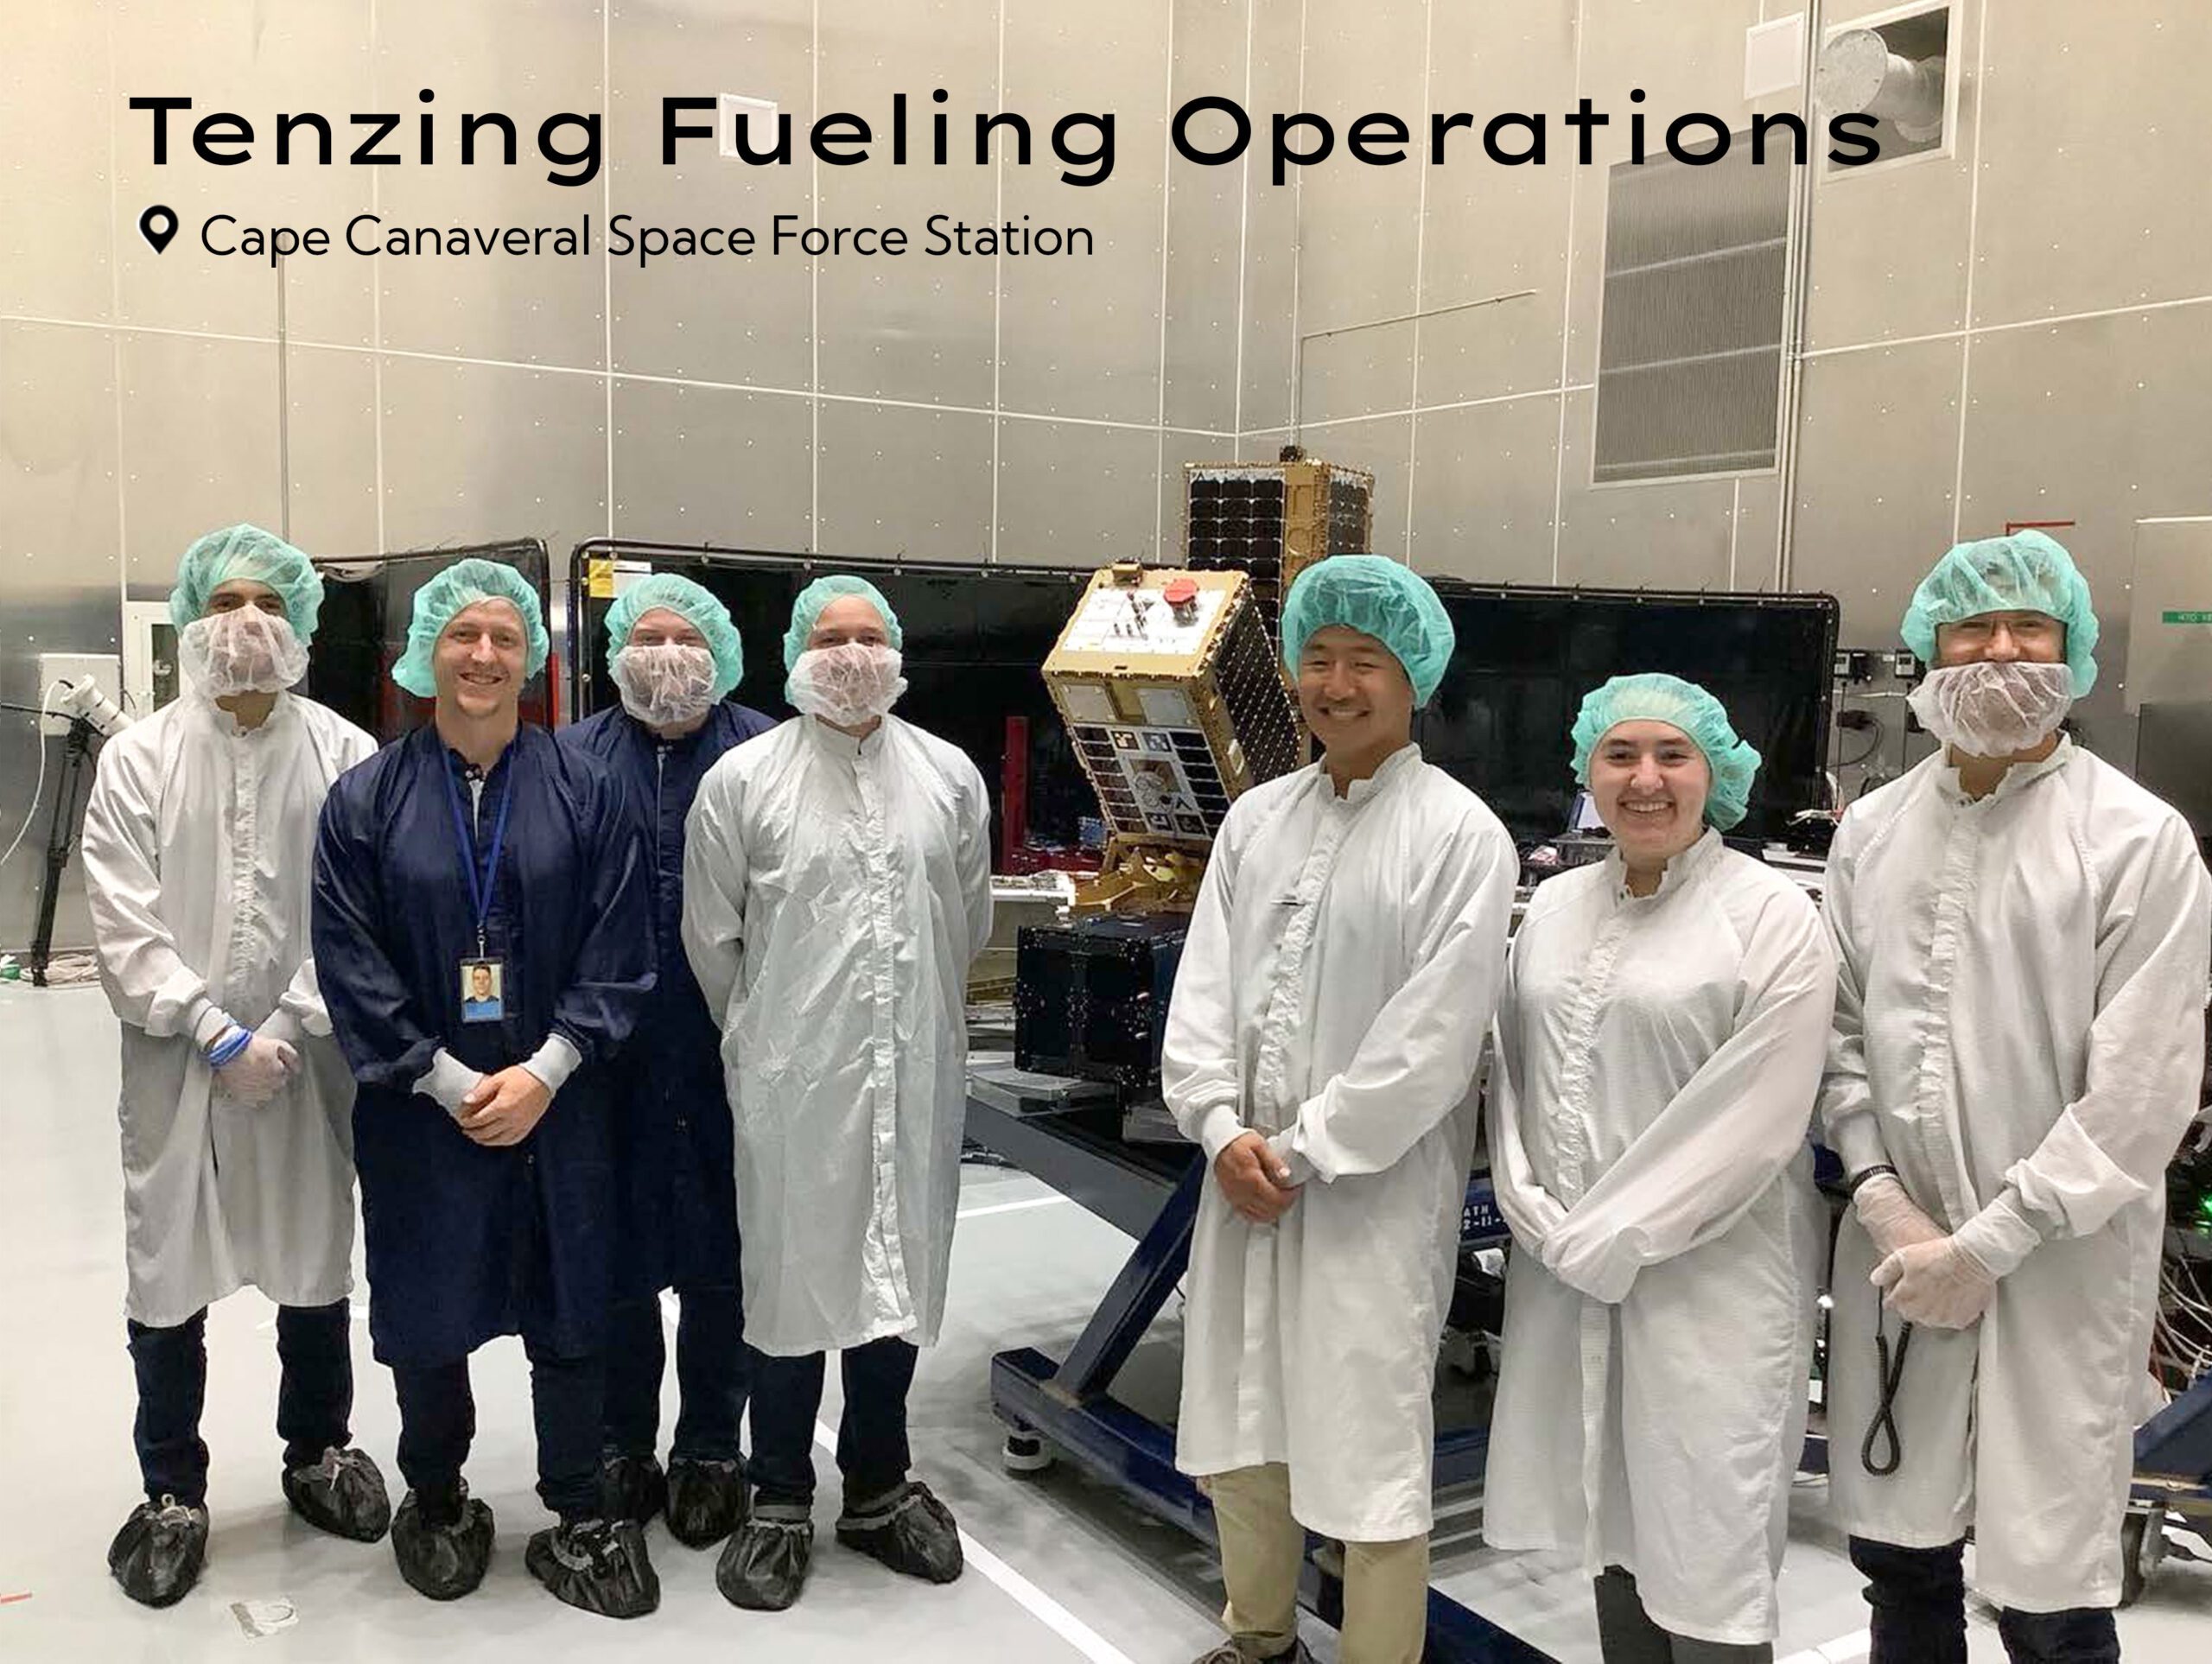 Tenzing fueling operations team in clean suit garments